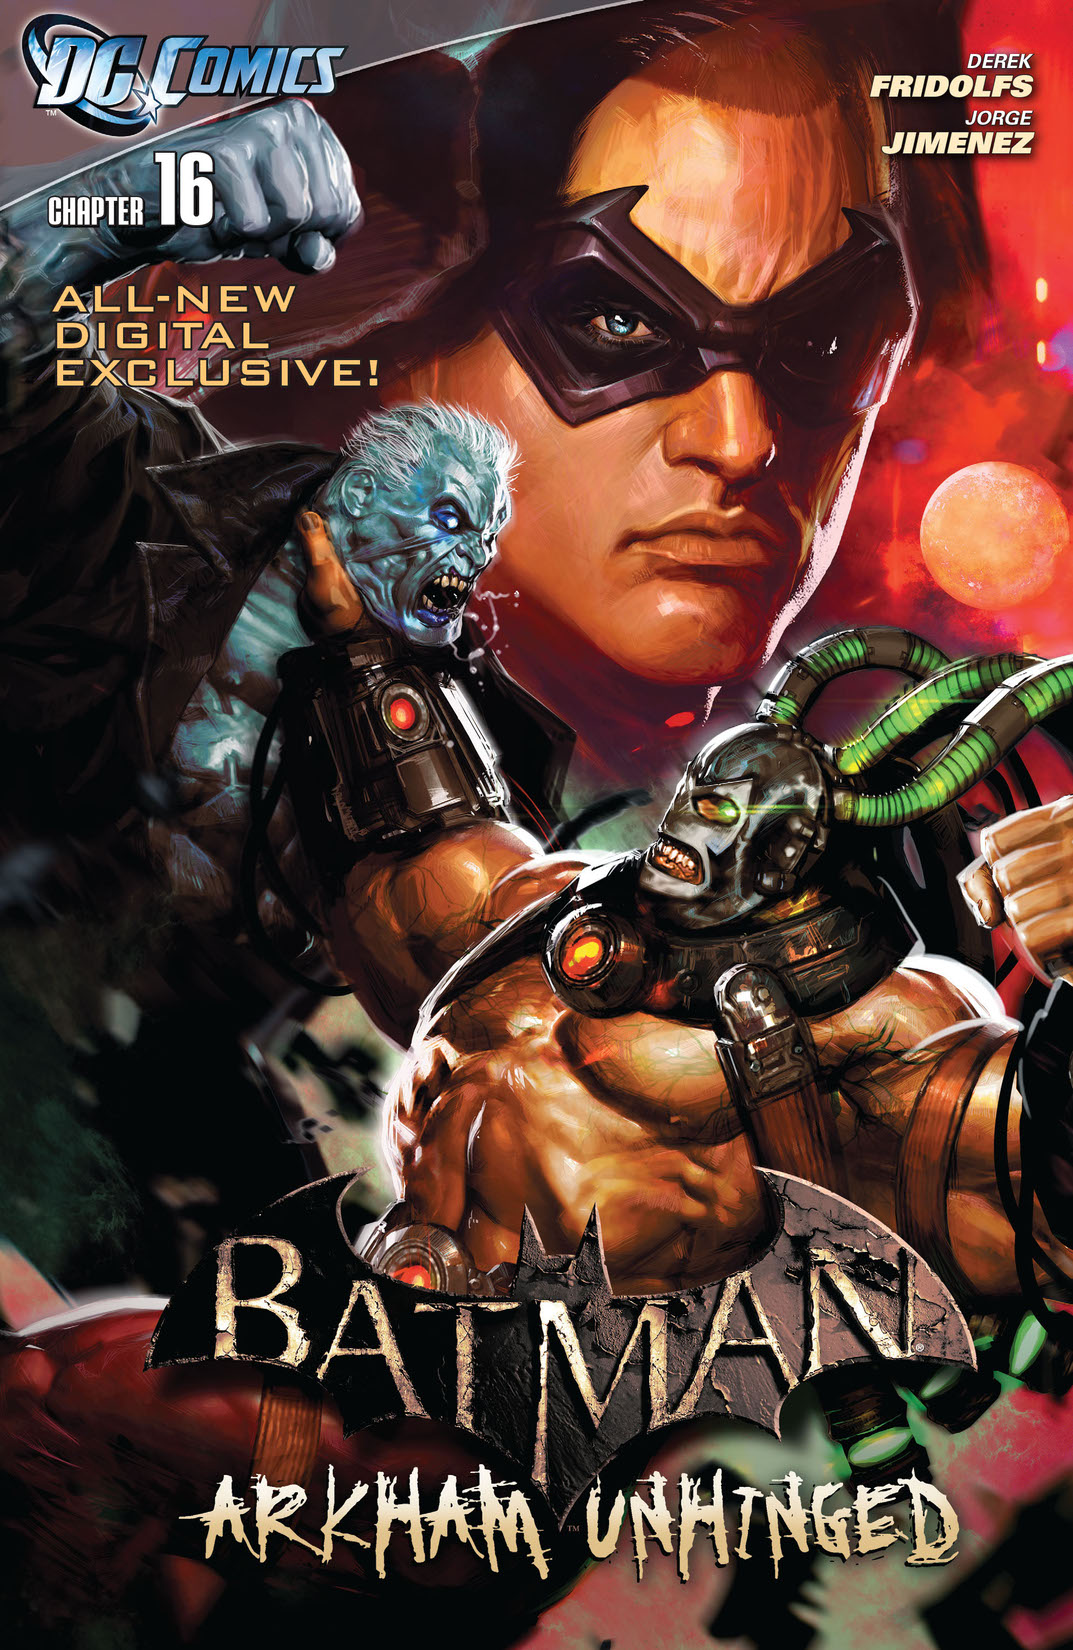 Batman: Arkham Unhinged #16 preview images